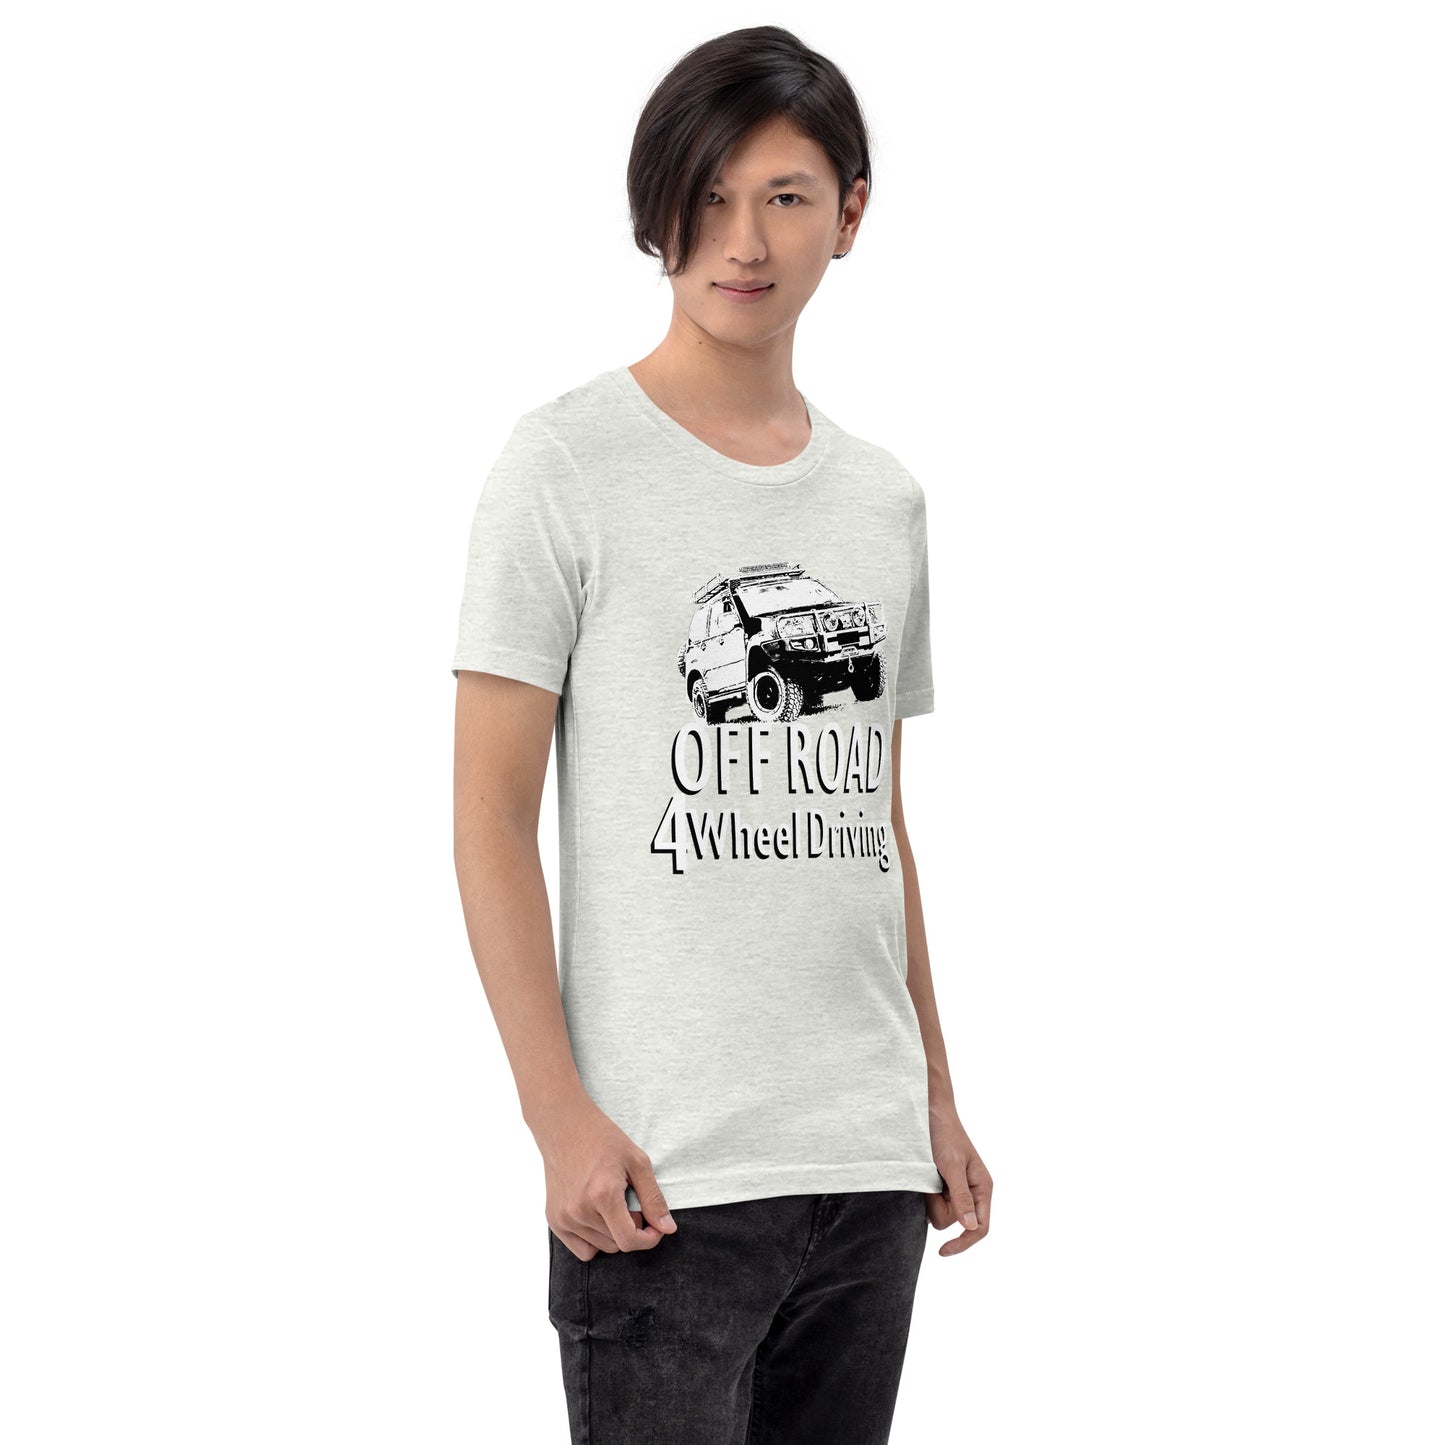 "Off Road 4 Wheel Driving" Unisex T-Shirt